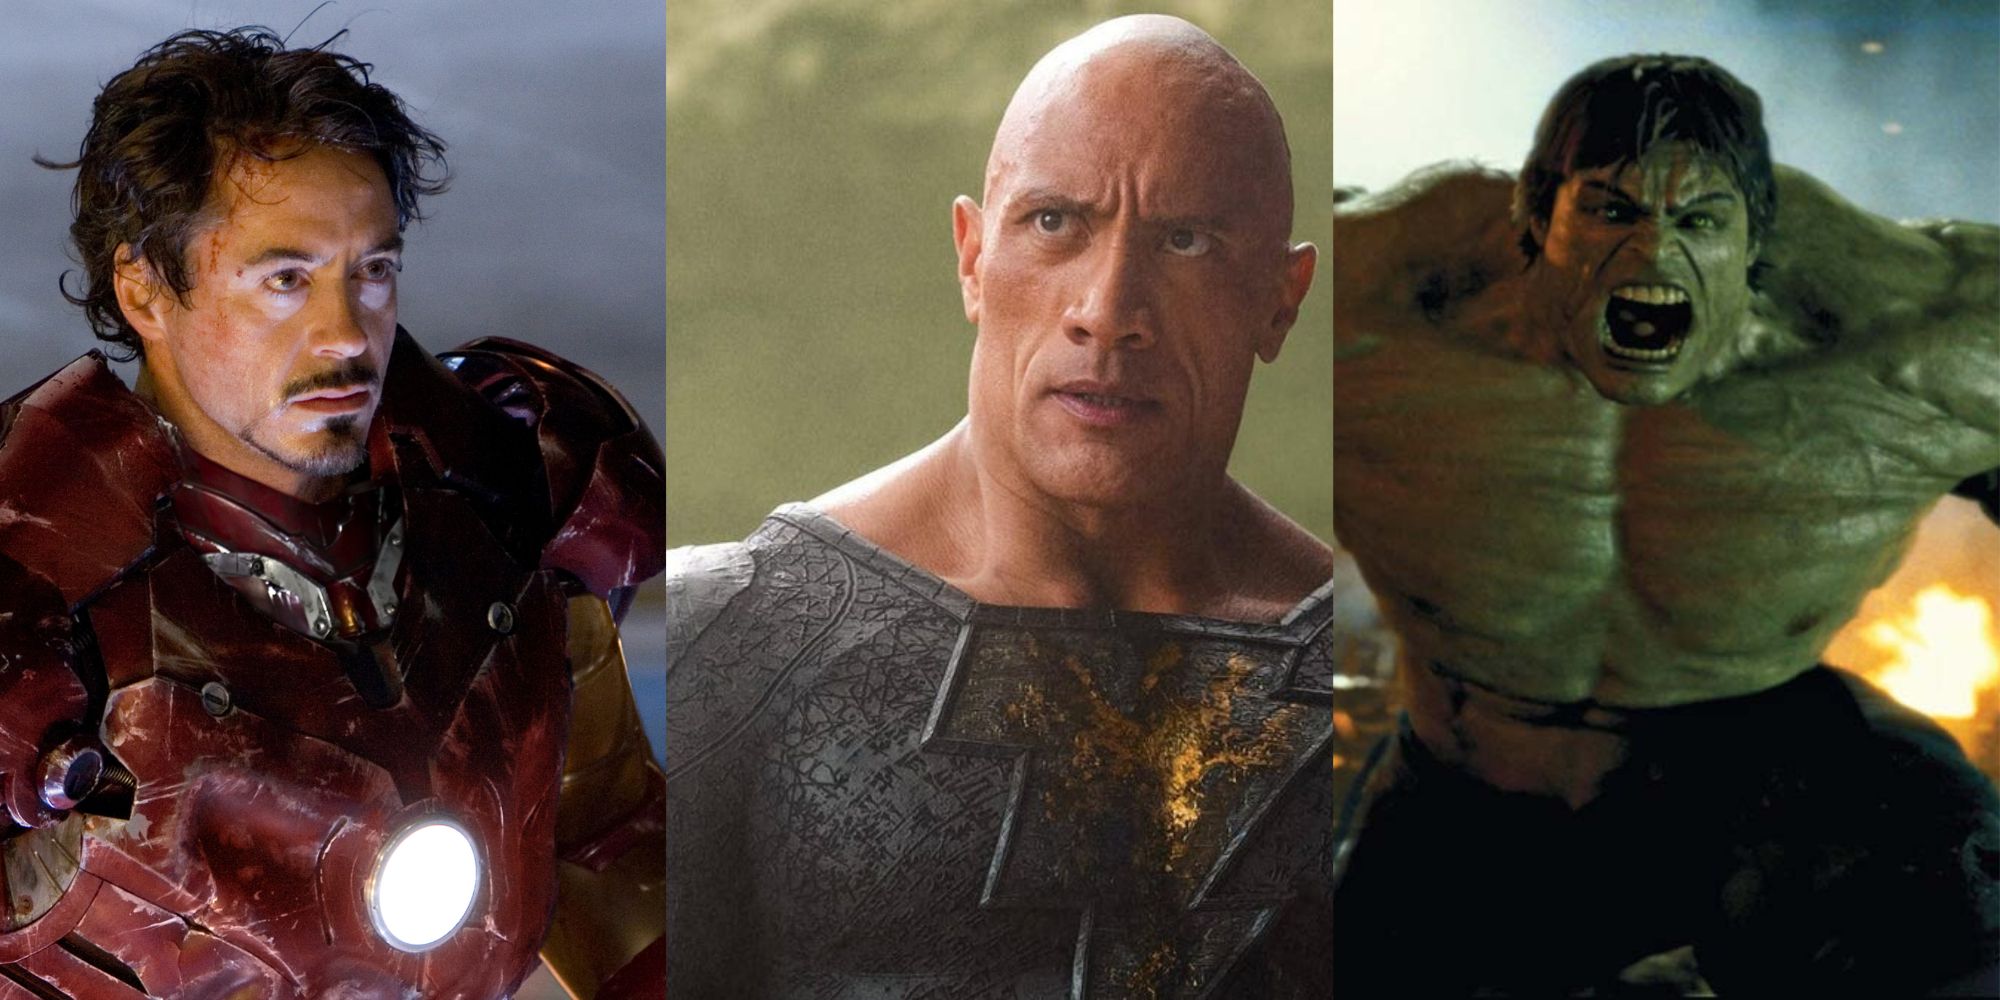 Split images of Iron Man, Black Adam, and The Hulk